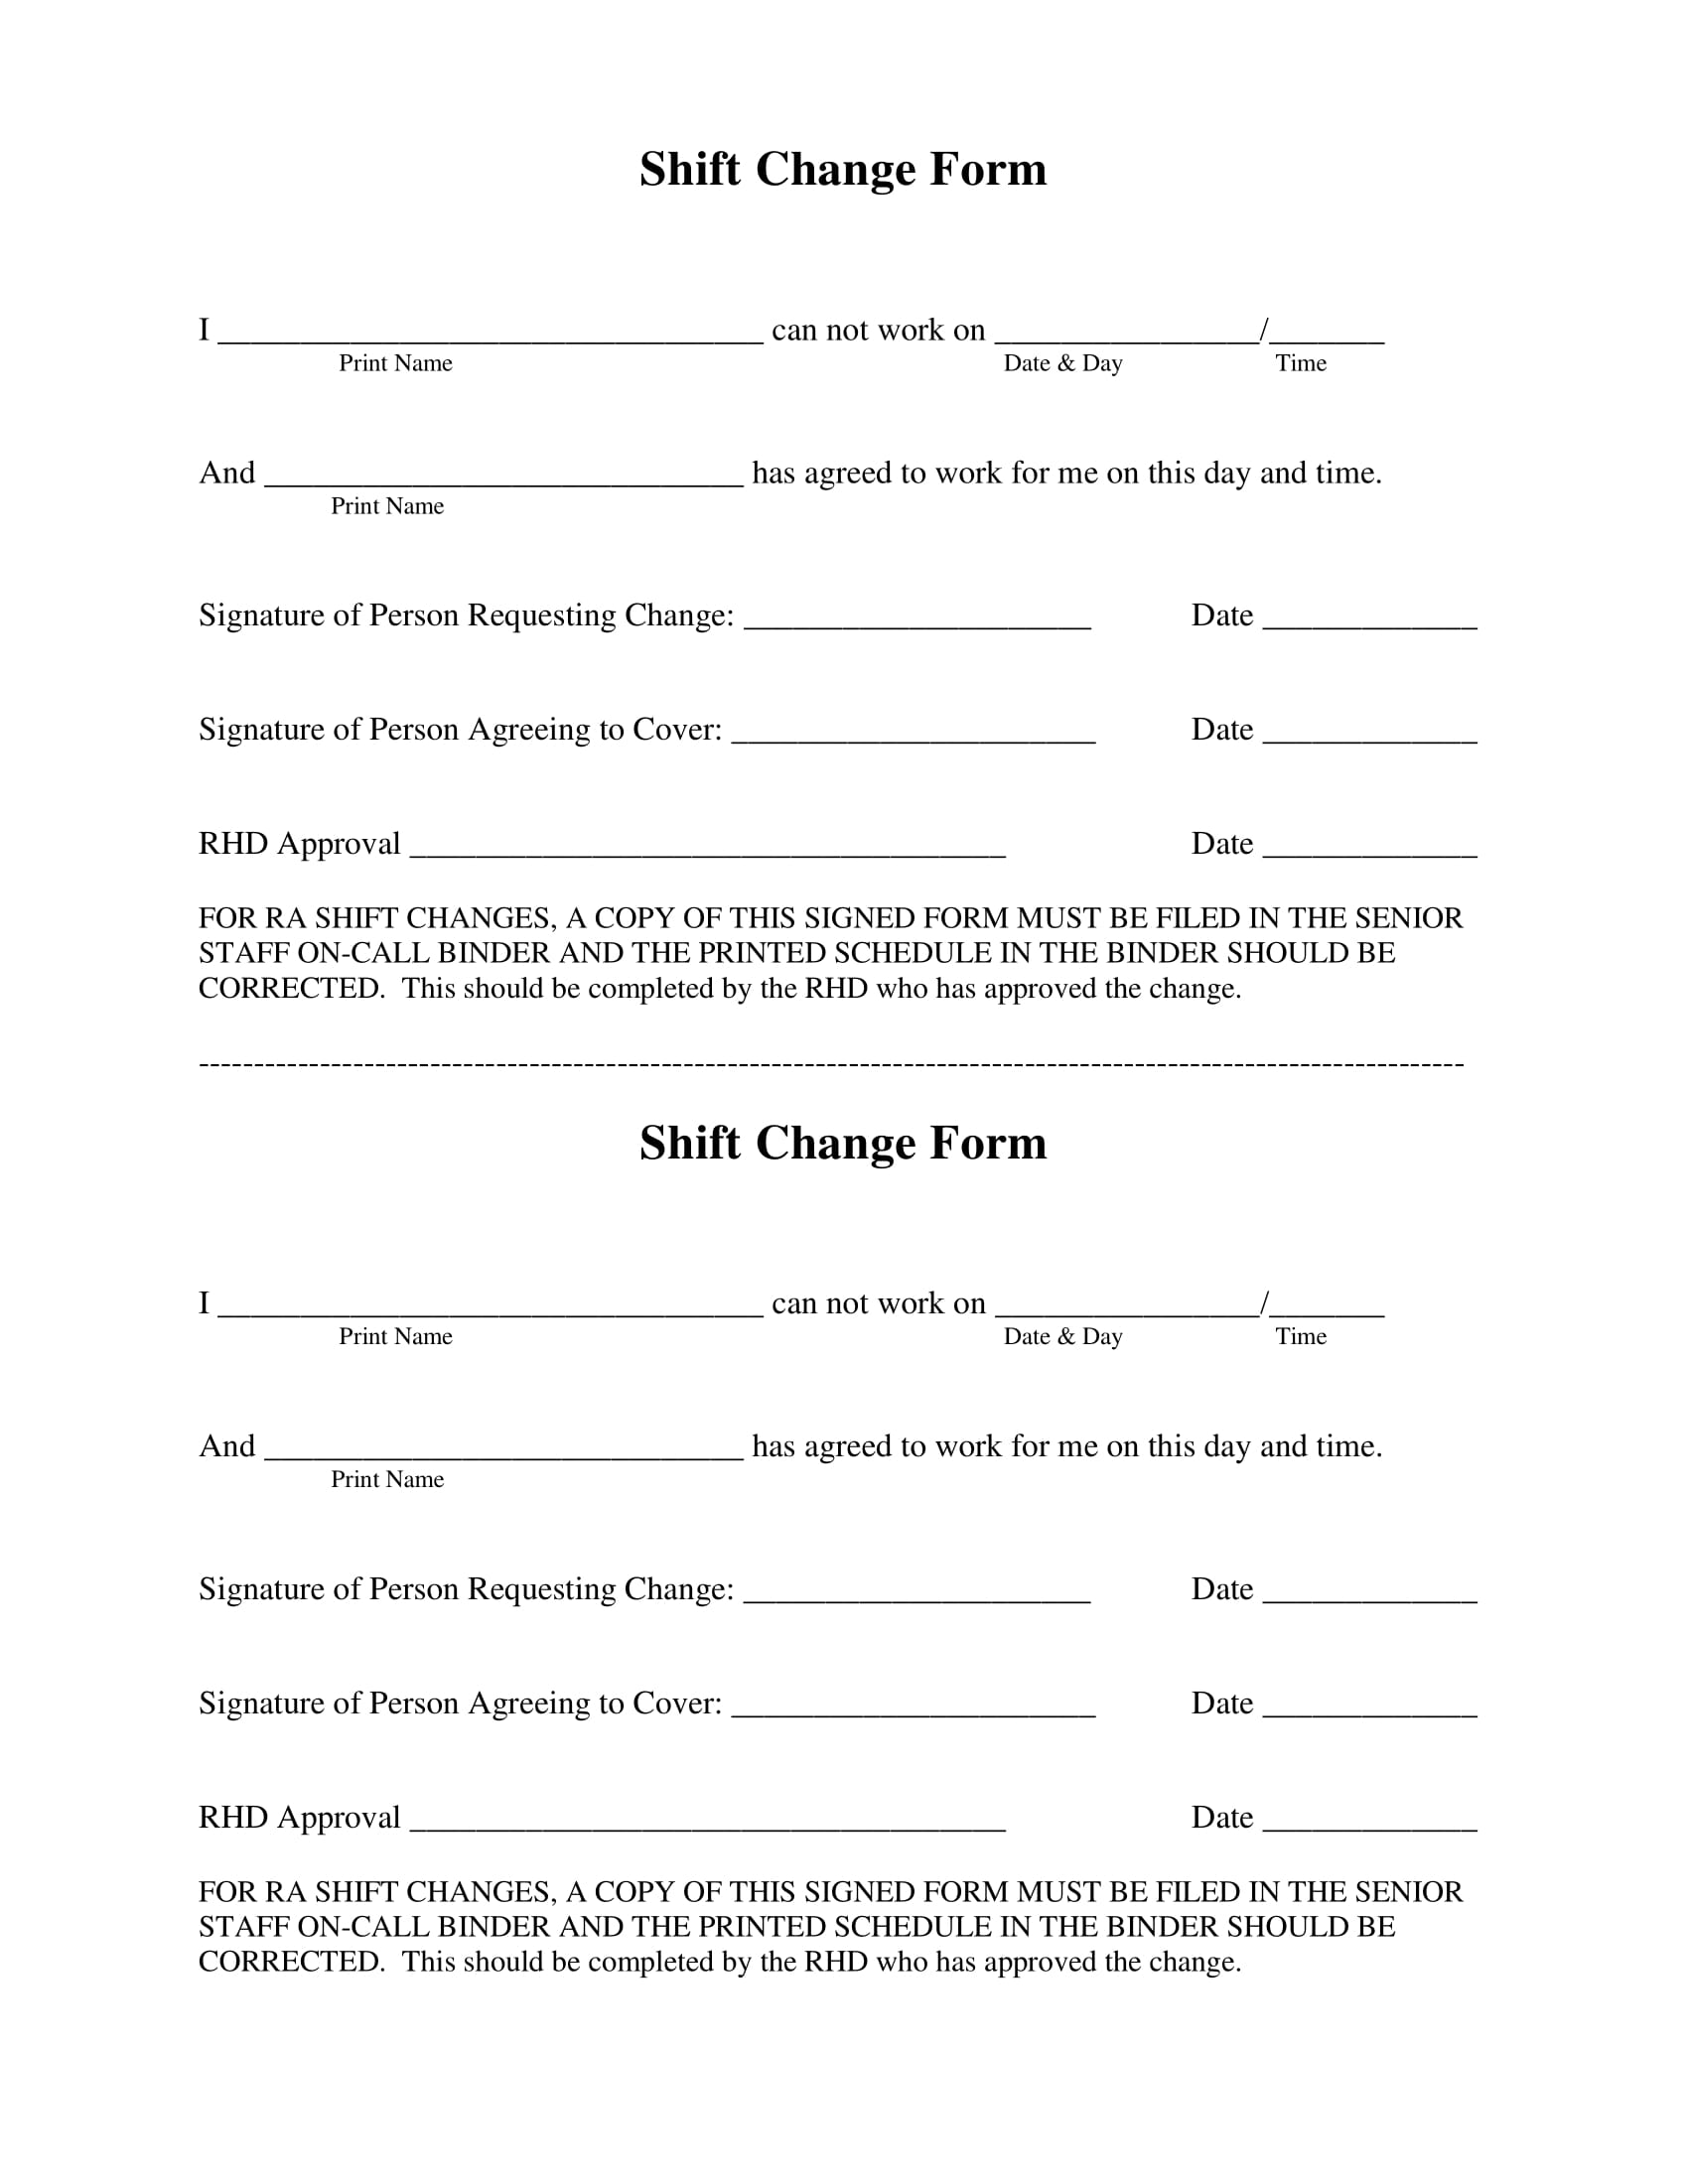 basic shift change form 1